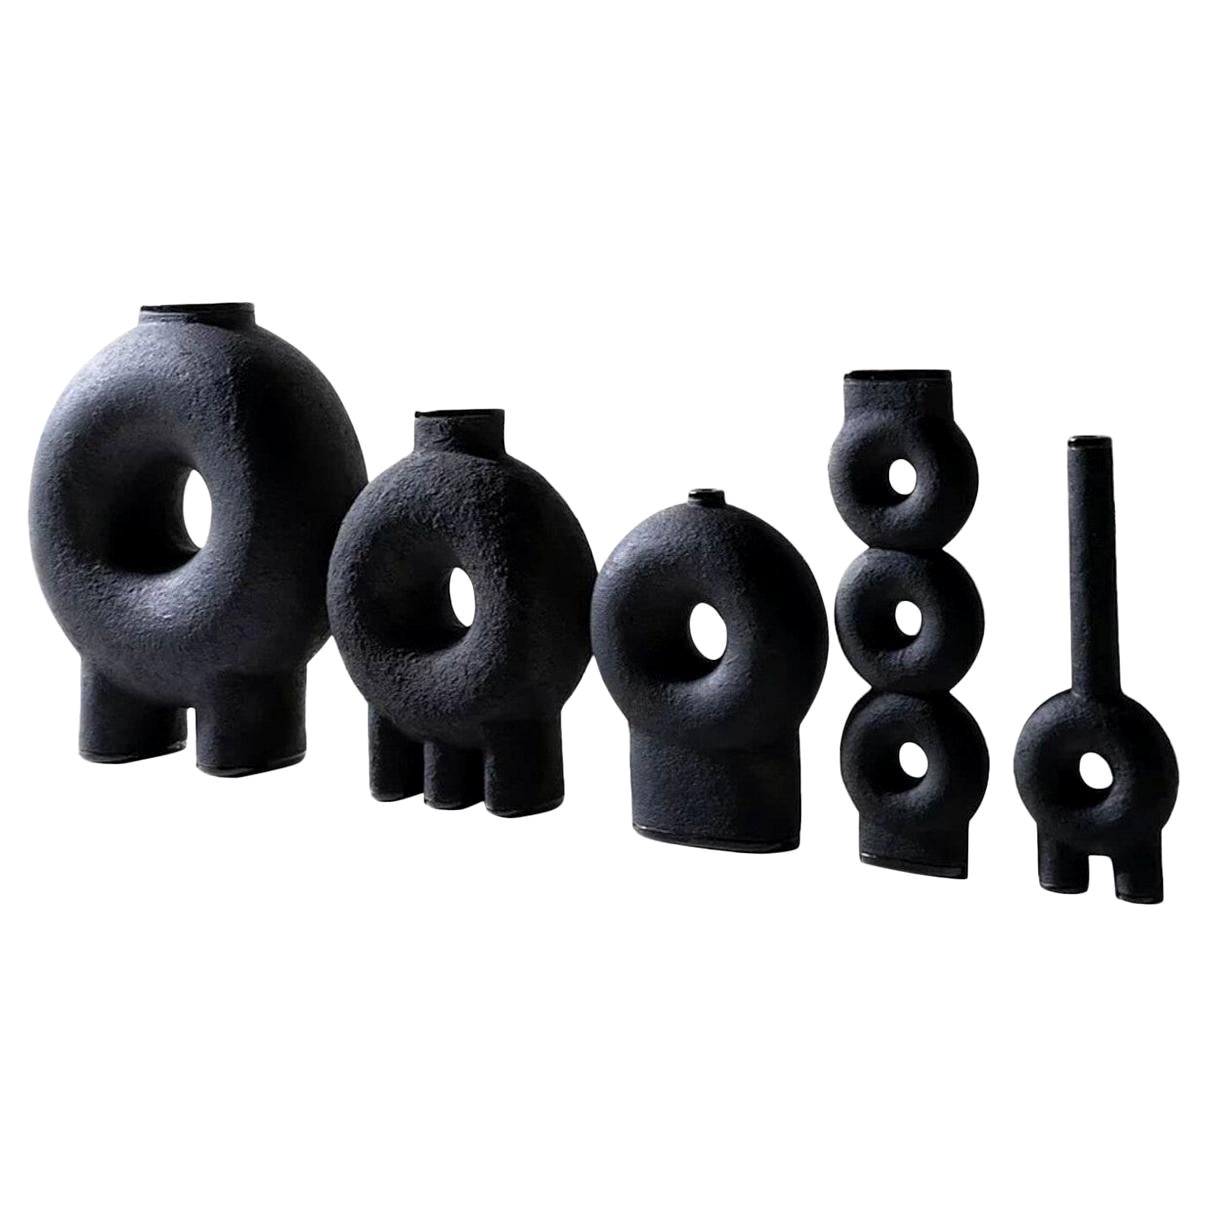 Ensemble of Sculpted Ceramic Vases by Faina